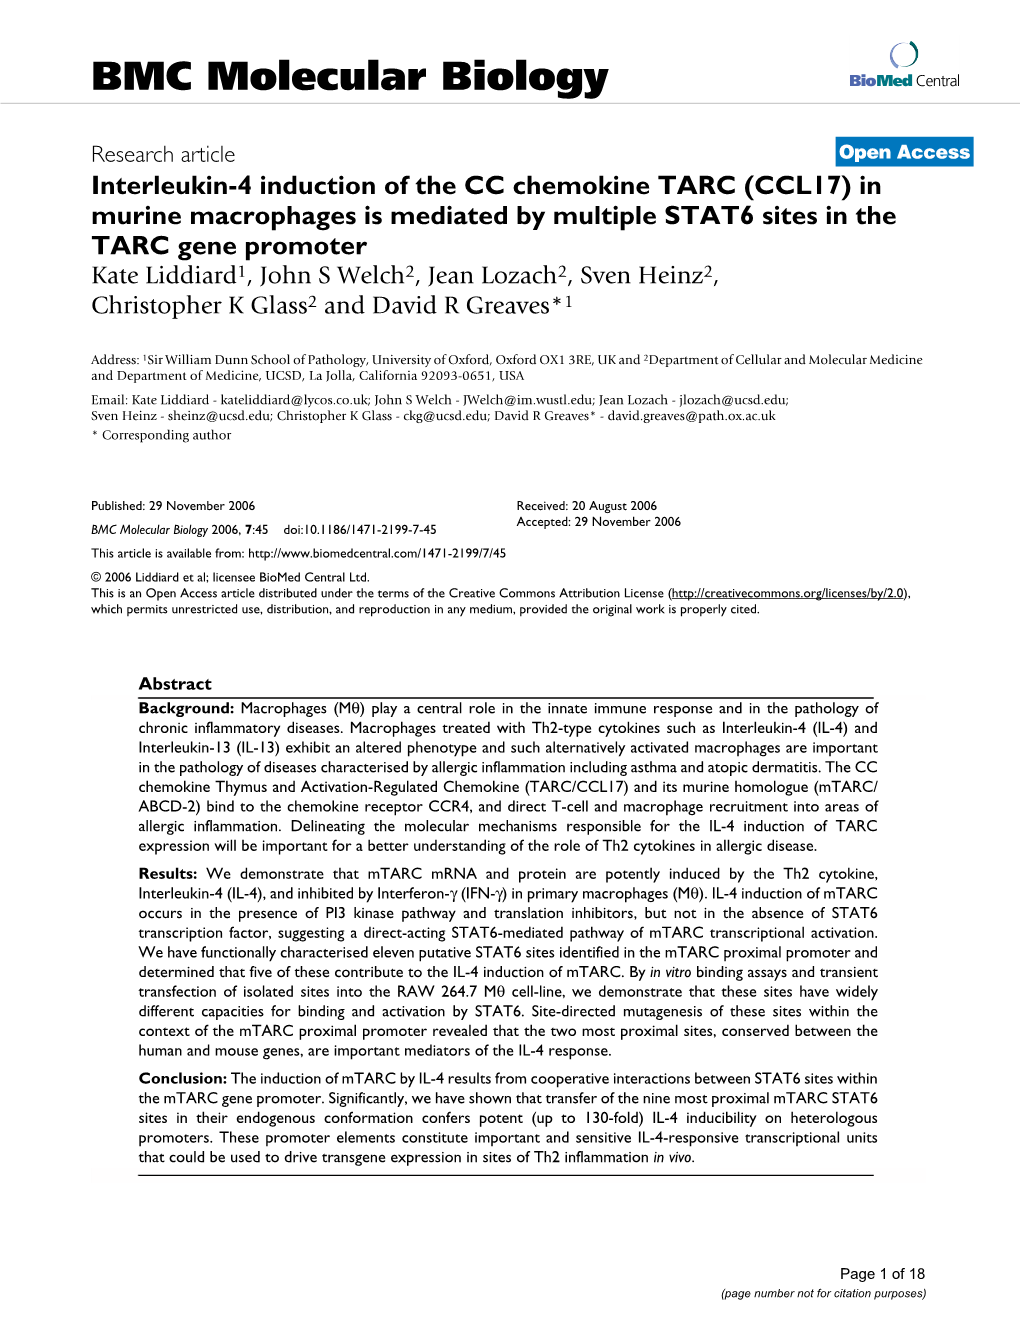 Interleukin-4 Induction of the CC Chemokine TARC (CCL17)